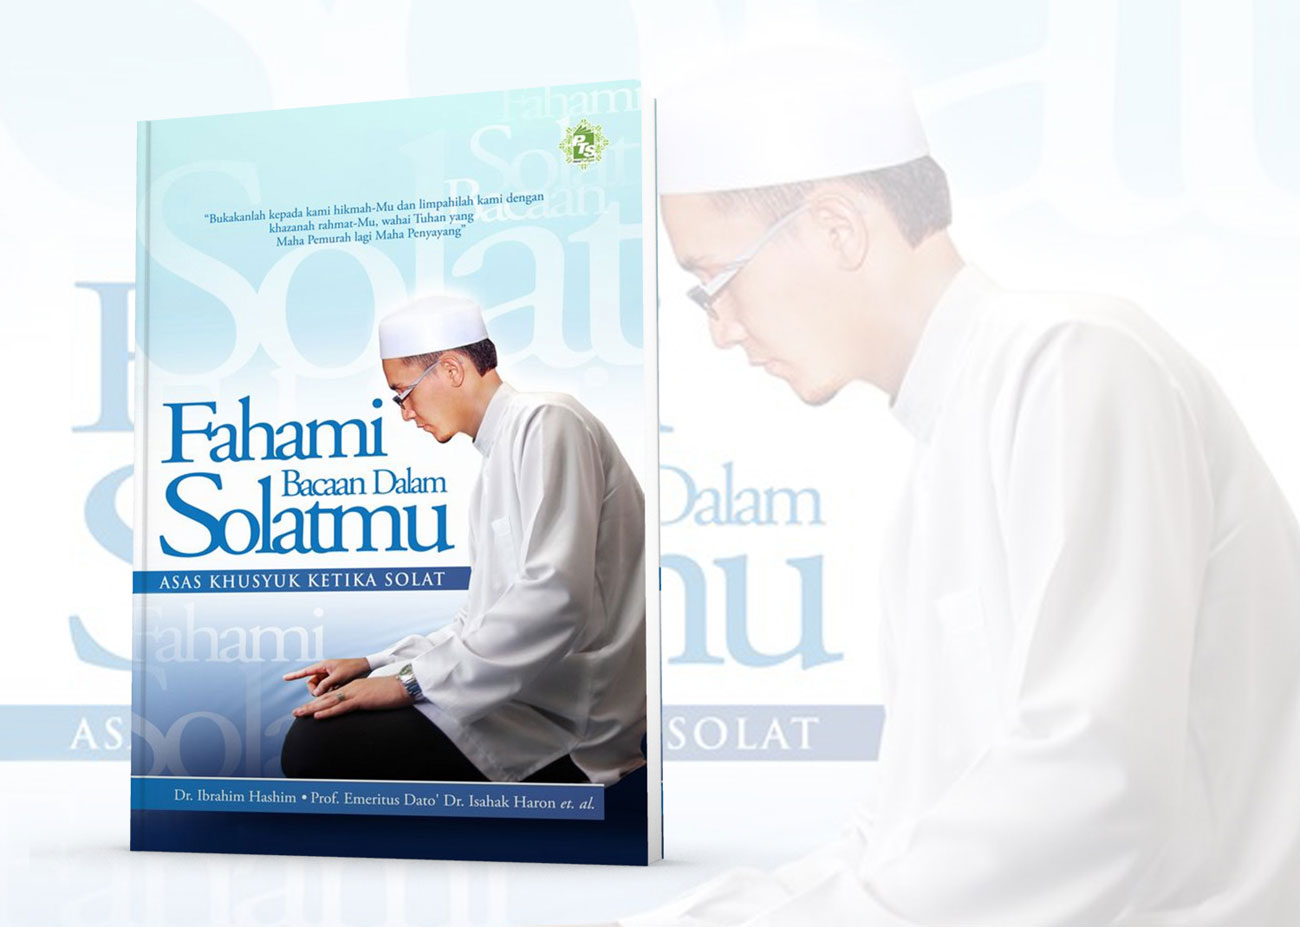 Fahami Bacaan Dalam Solatmu - Ibrahim bin Hashim, Profesor Emeritus Dato’ Isahak Haron